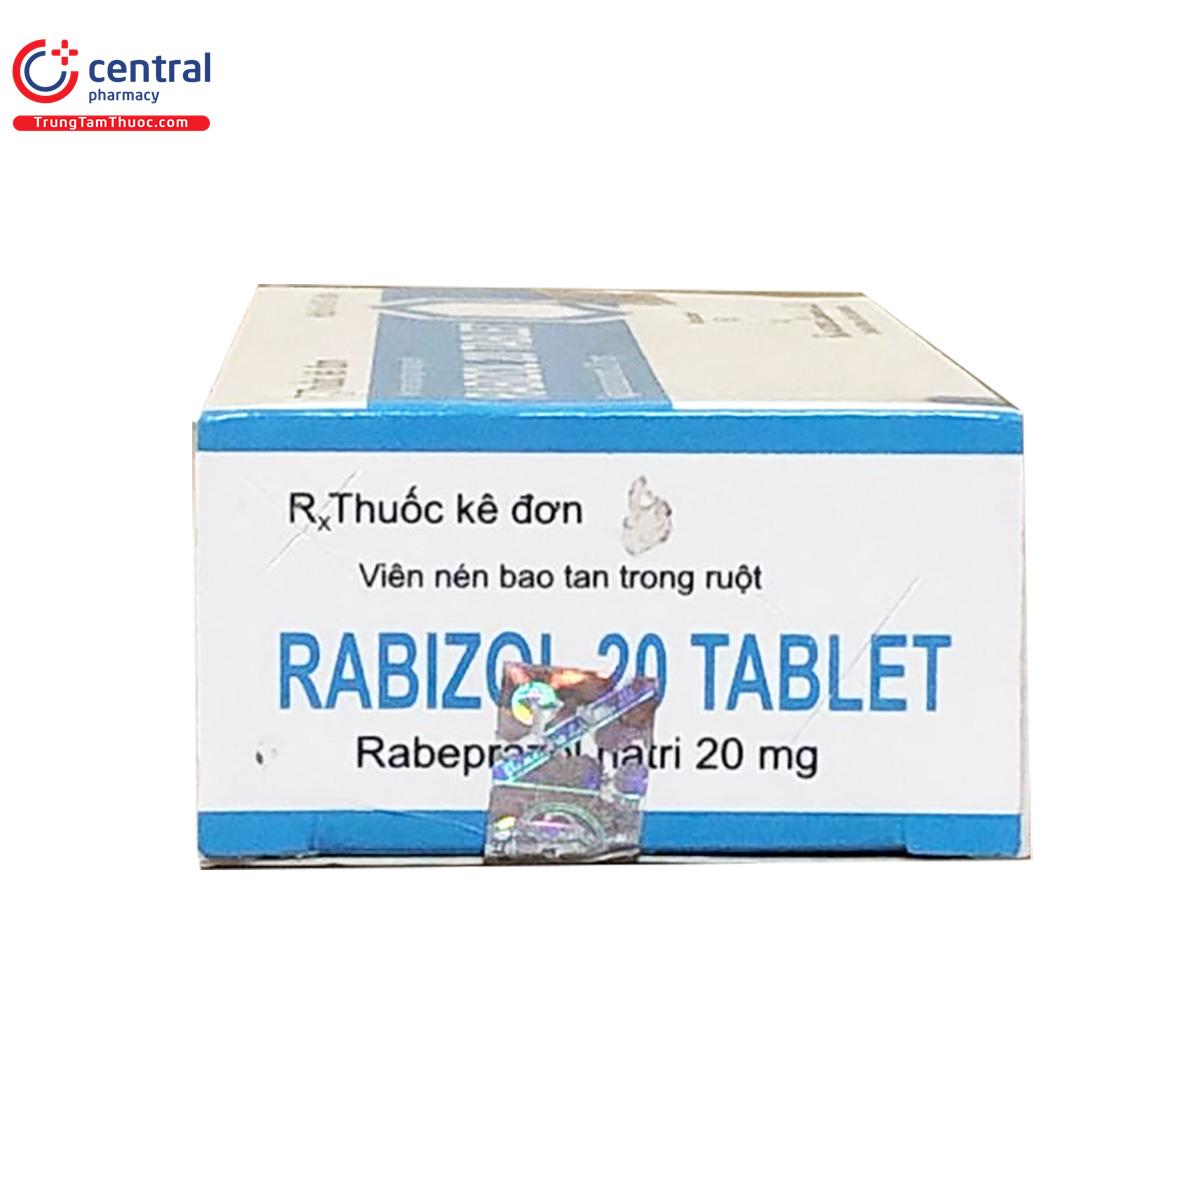 Rabizol 20 tablet